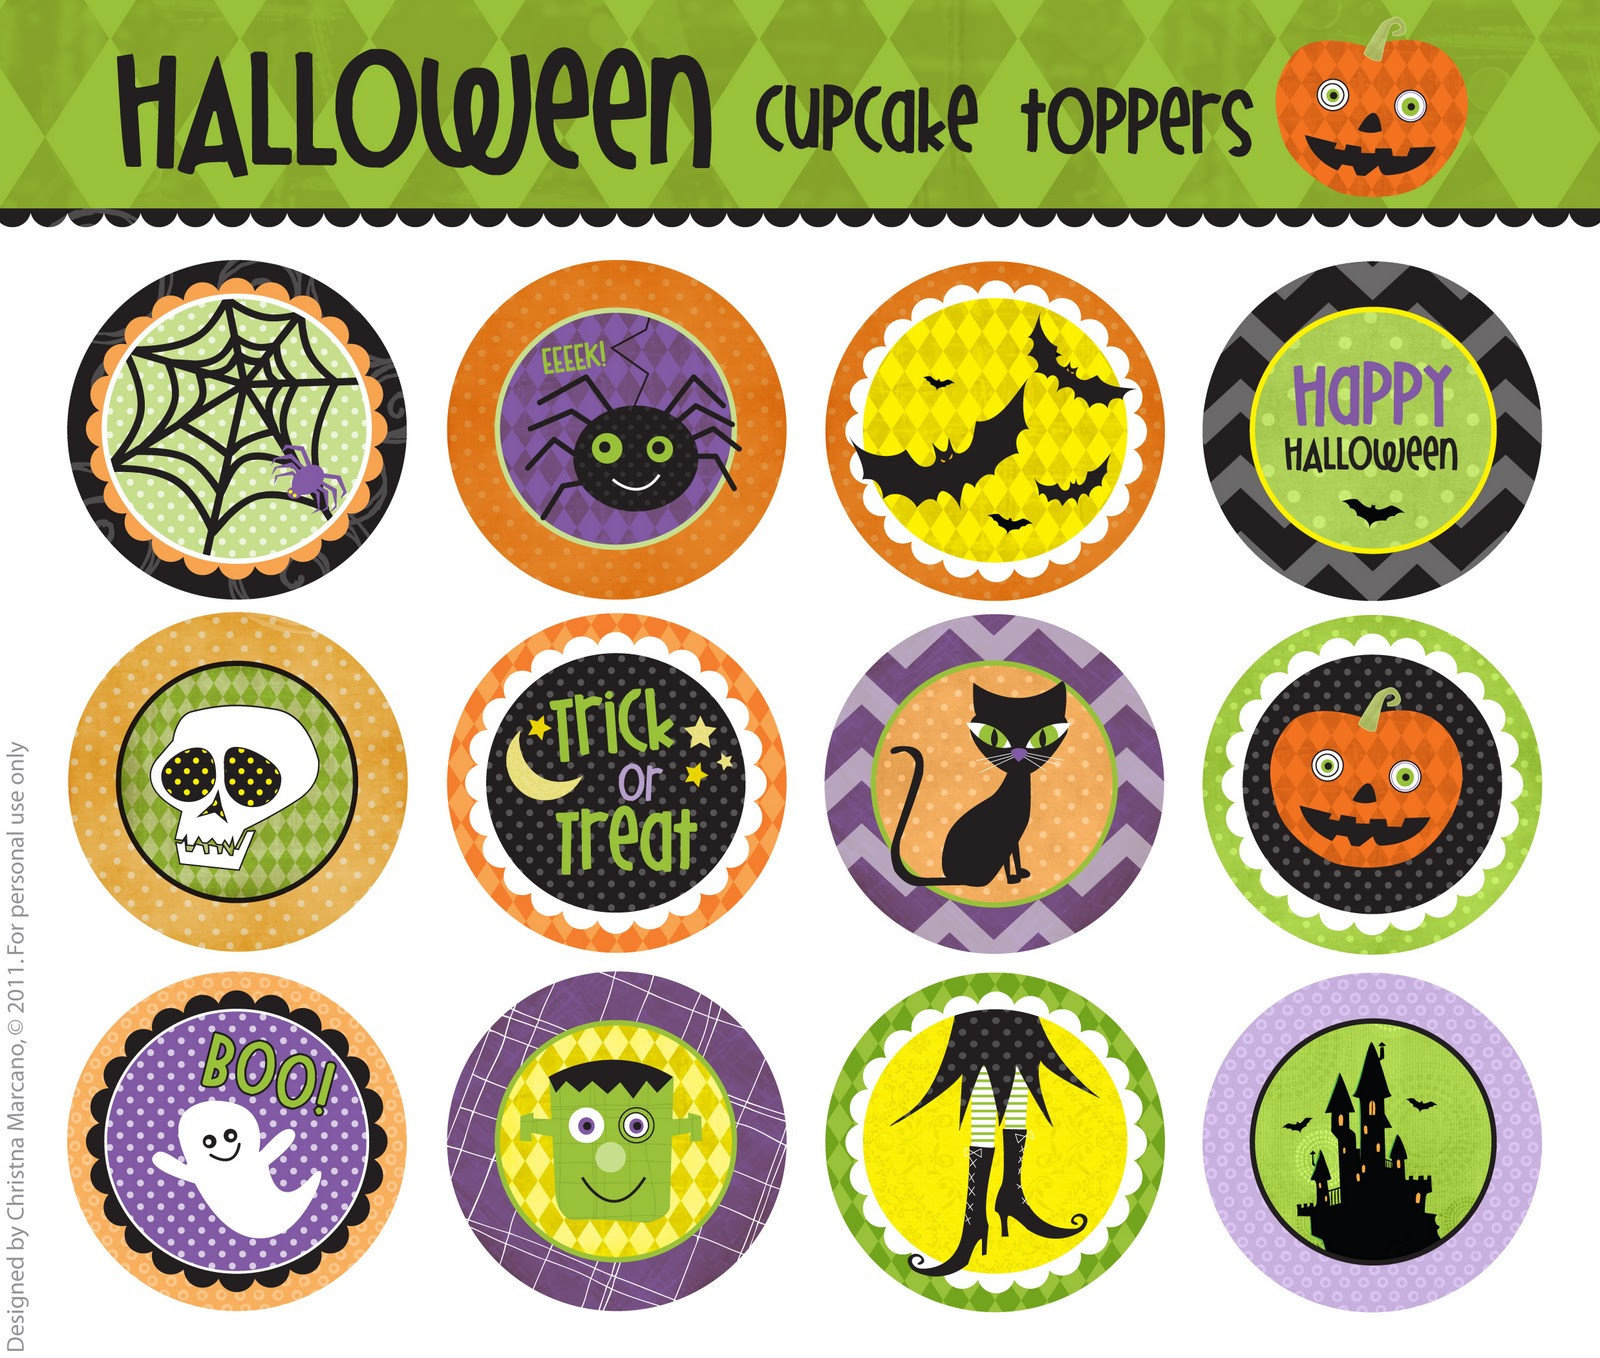 Halloween Cupcakes Toppers
 cm2 Halloween Cupcake Toppers F R E E printable